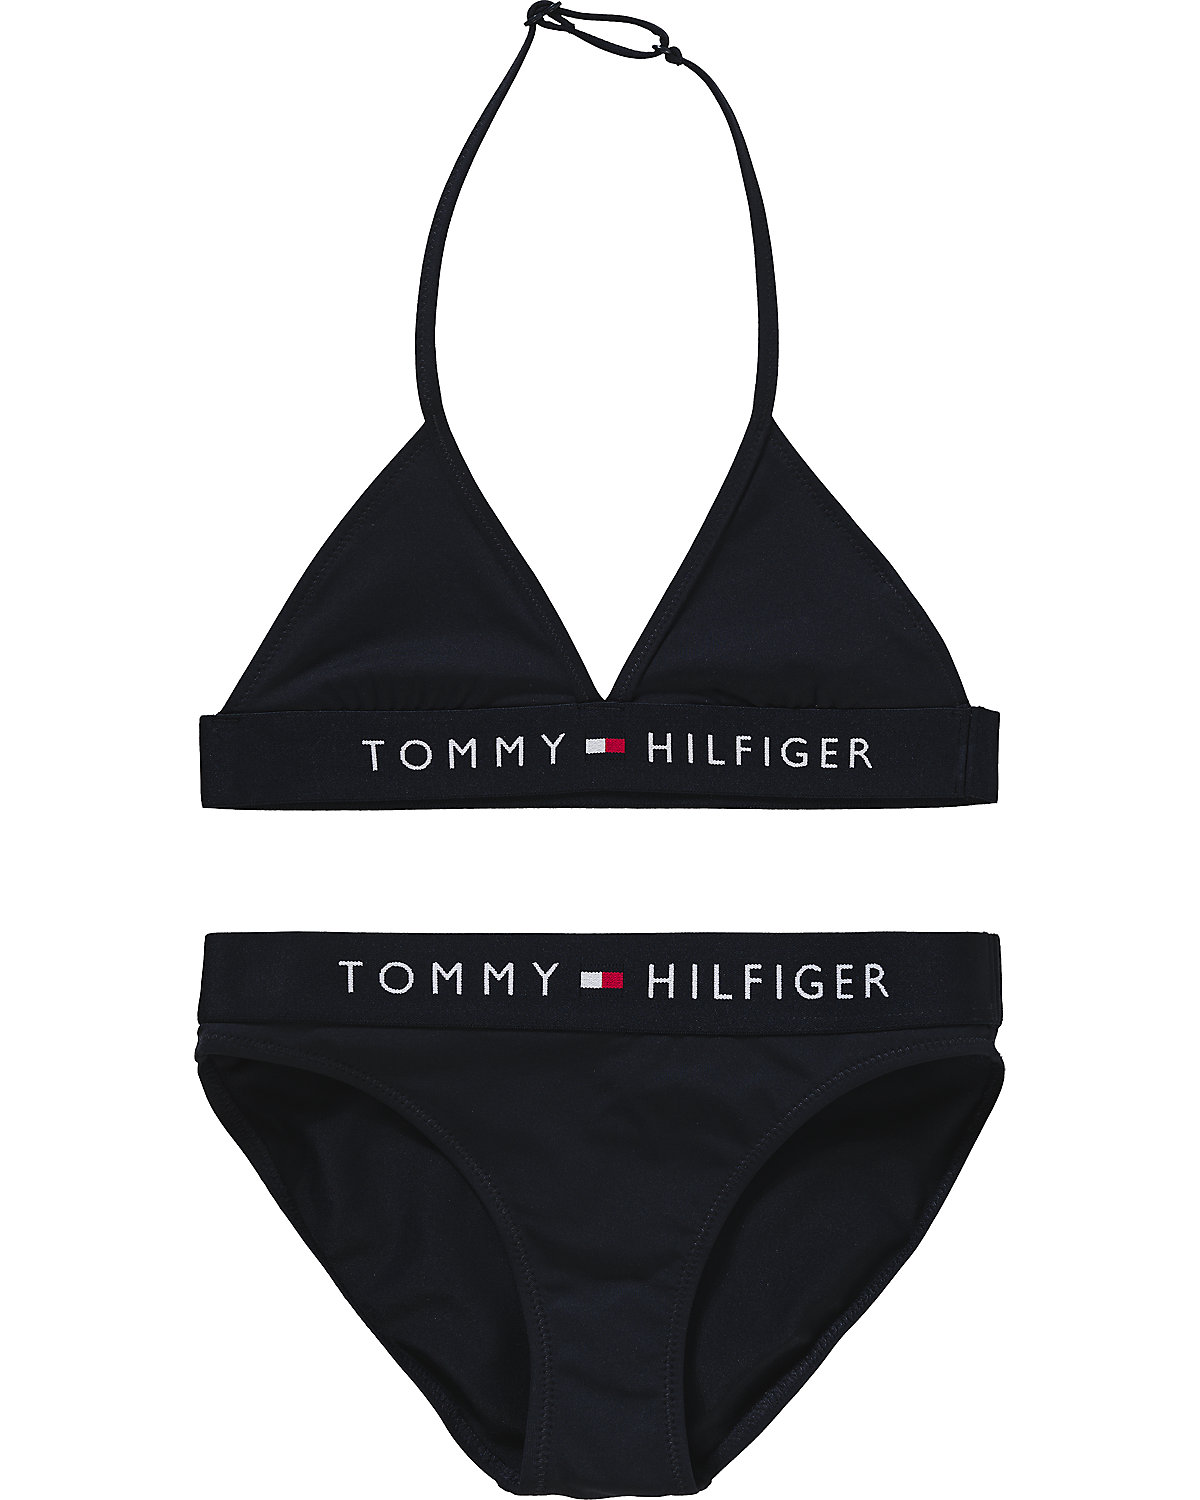 TOMMY HILFIGER UNDERWEAR Kinder Bikini